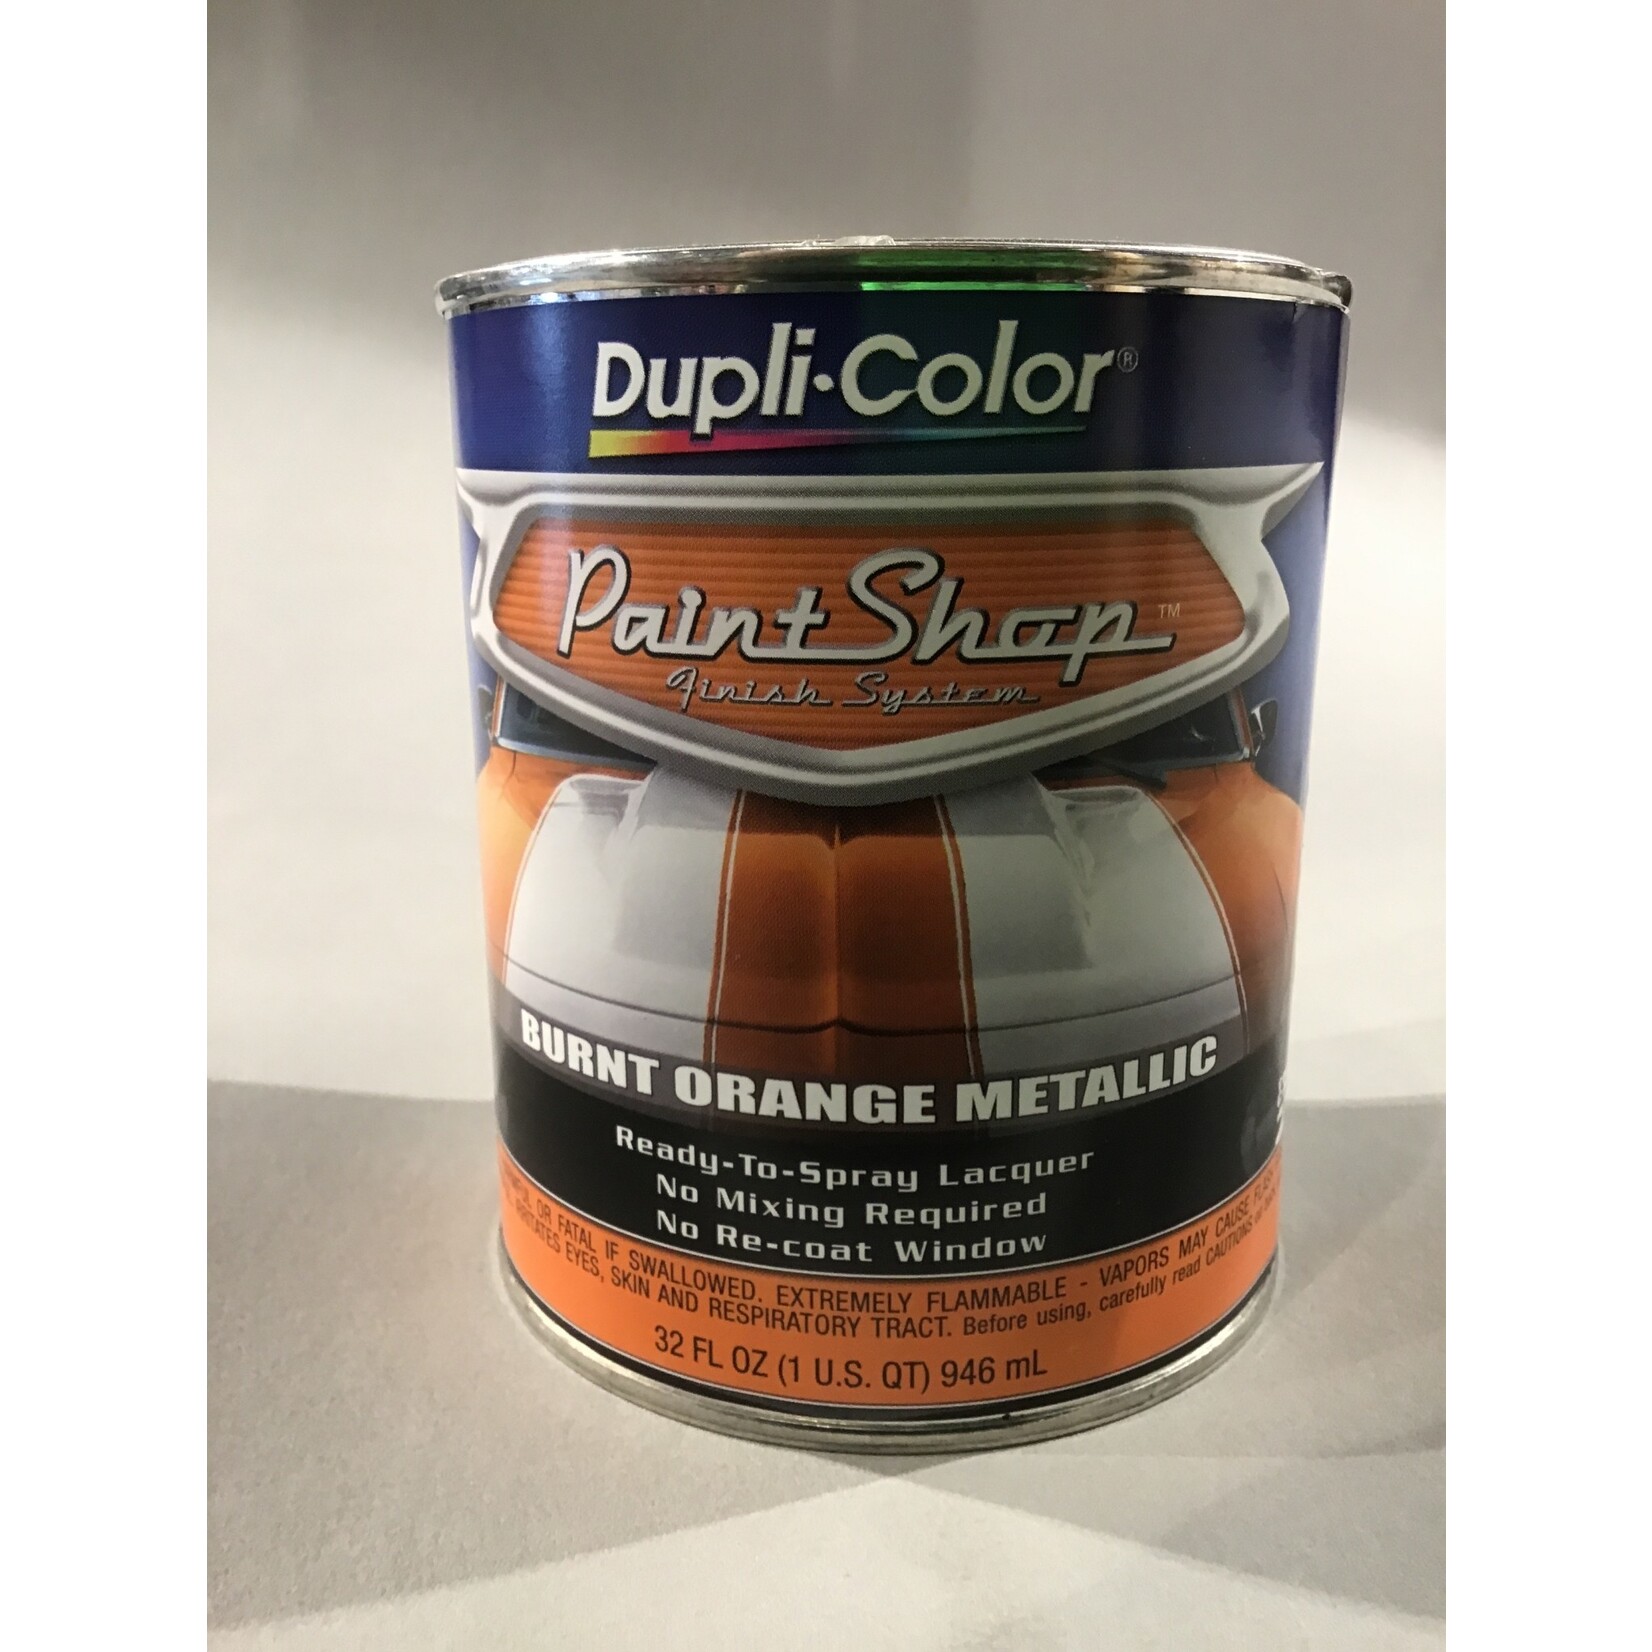 Dupli-Color Paint Shop Finish System - Burnt Orange Metallic